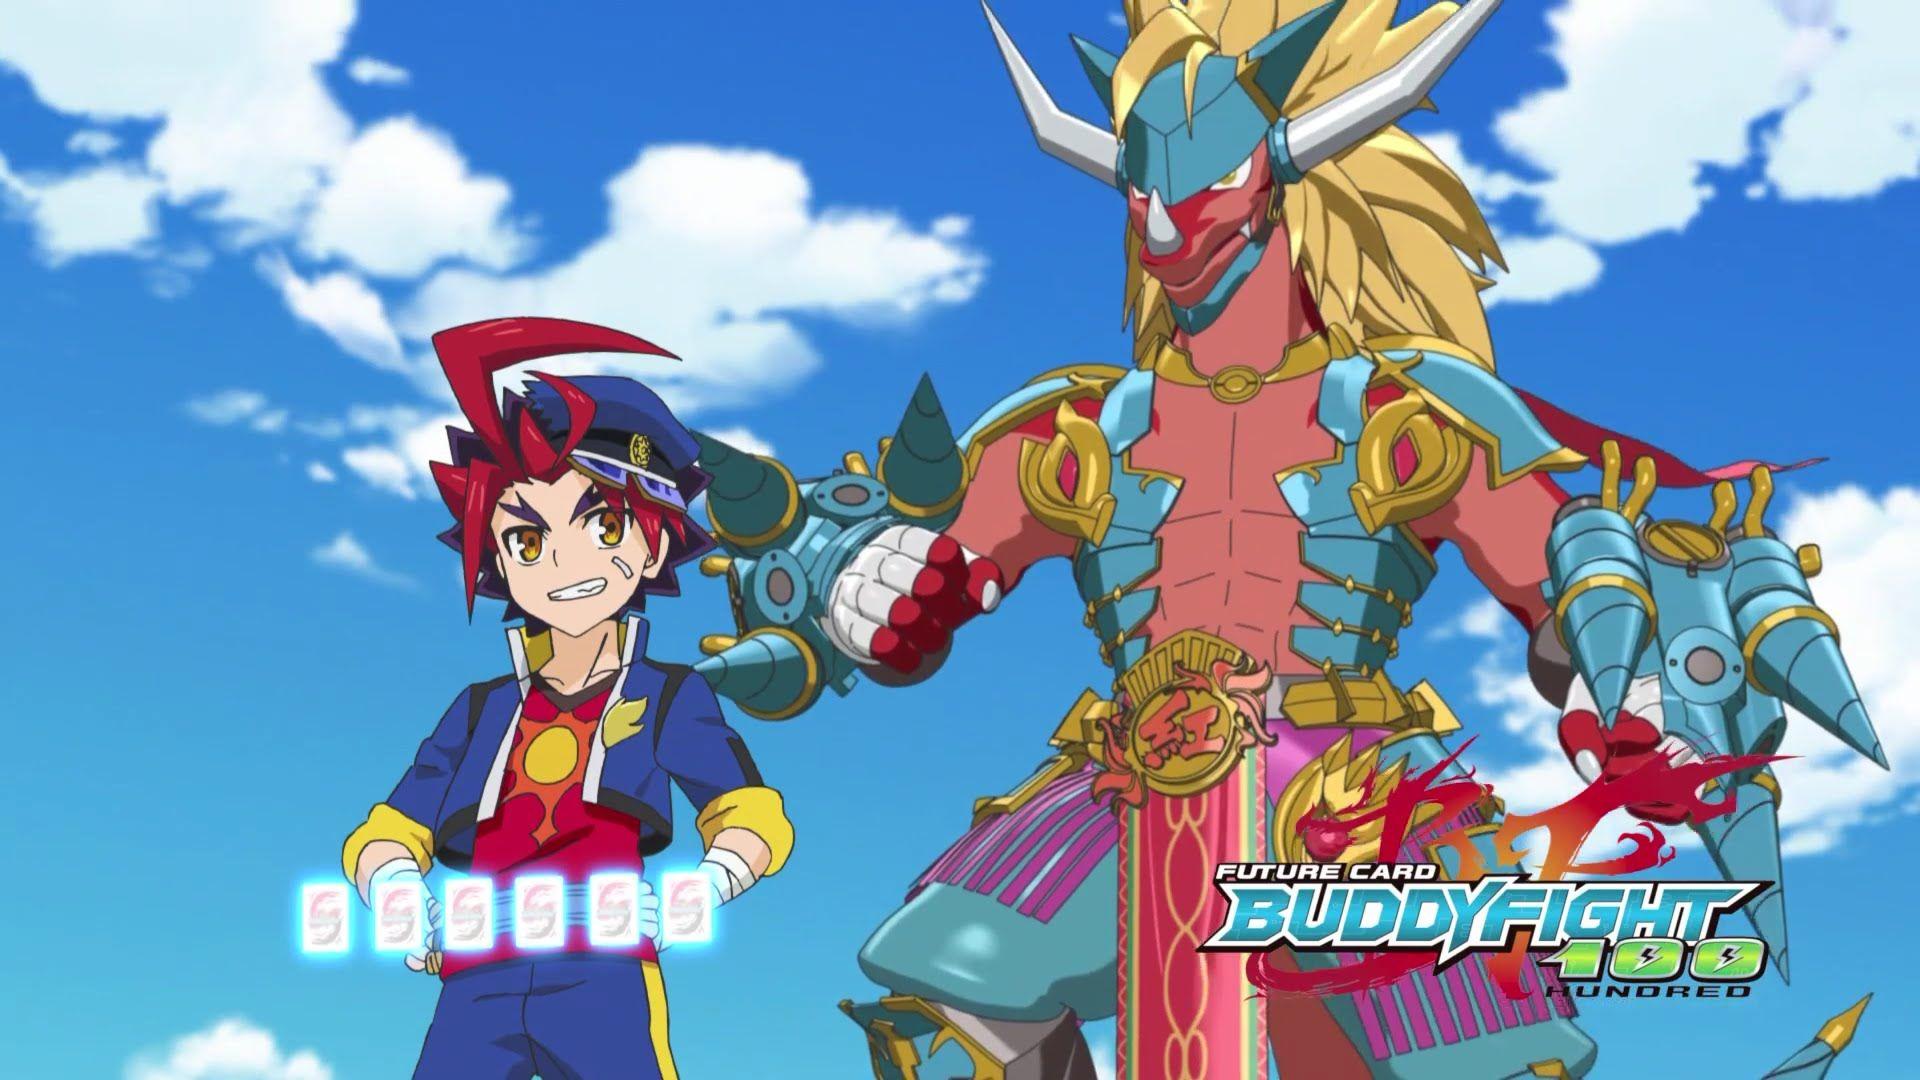 Future Card Buddyfight 100 Episode 1 Anime Review Crimson Battler